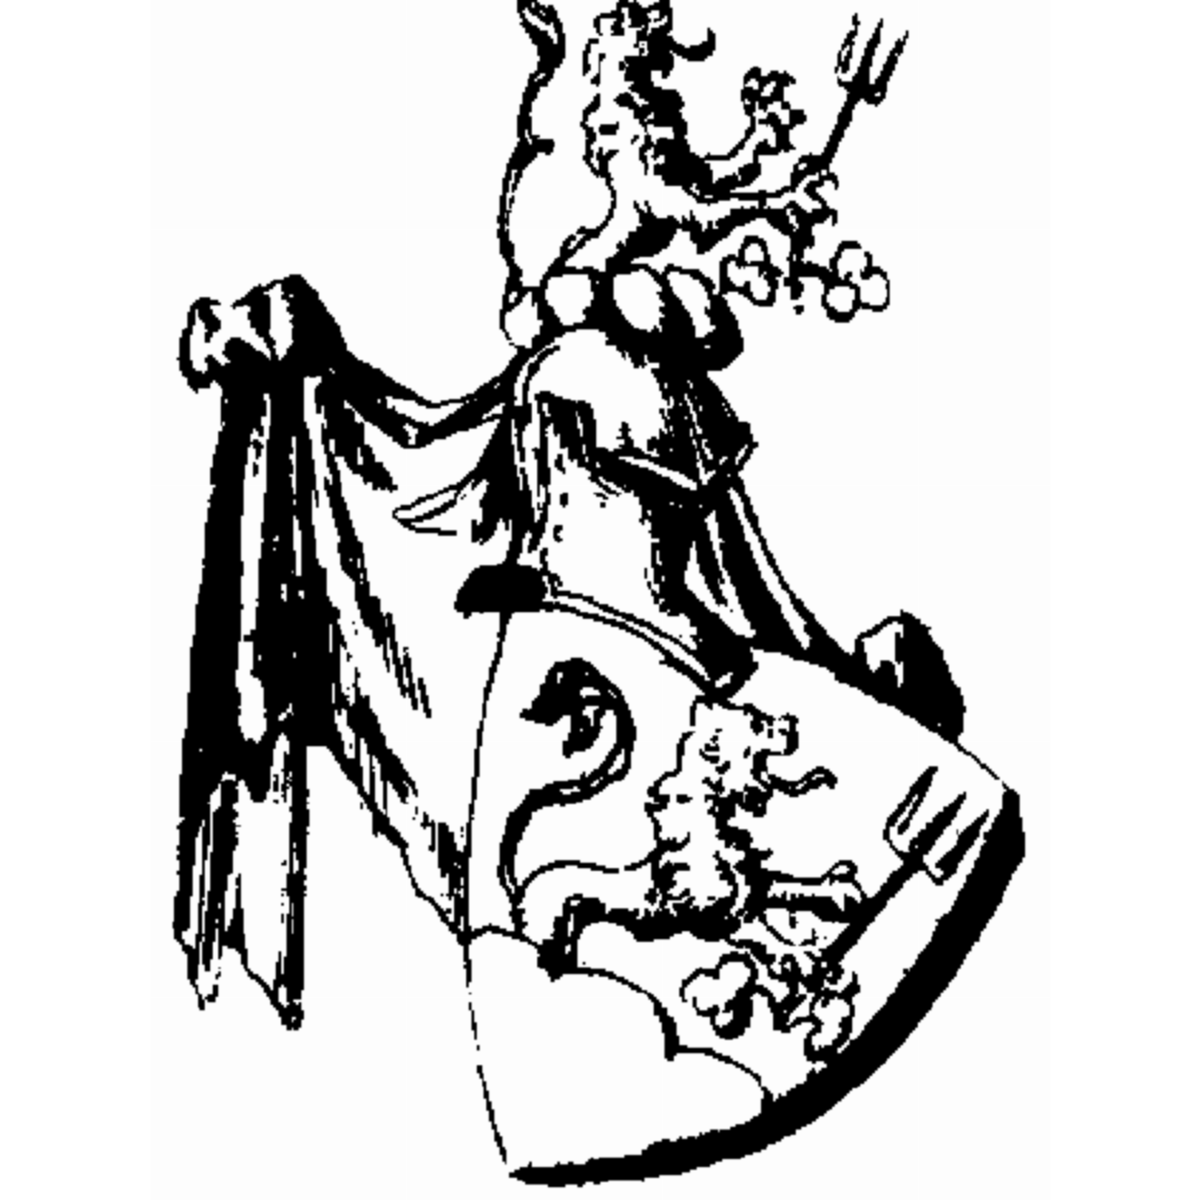 Coat of arms of family Prim